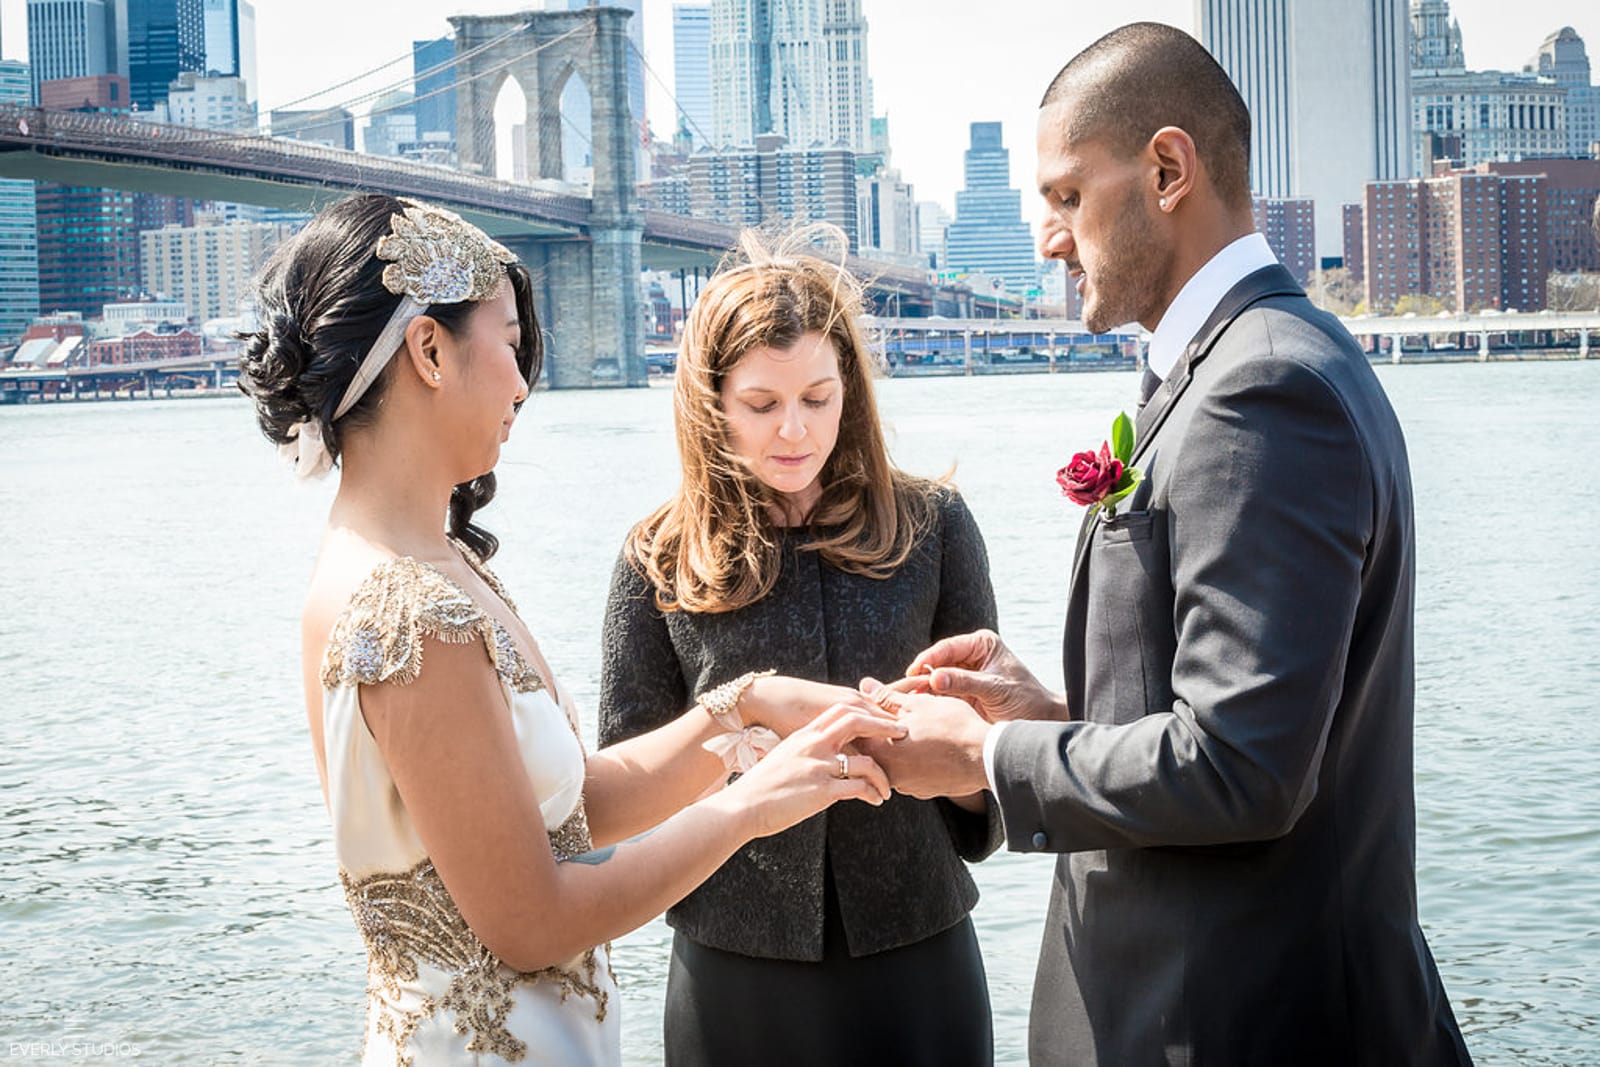 Brooklyn Bridge Park wedding. Photos by New York elopement photographer Everly Studios, www.everlystudios.com